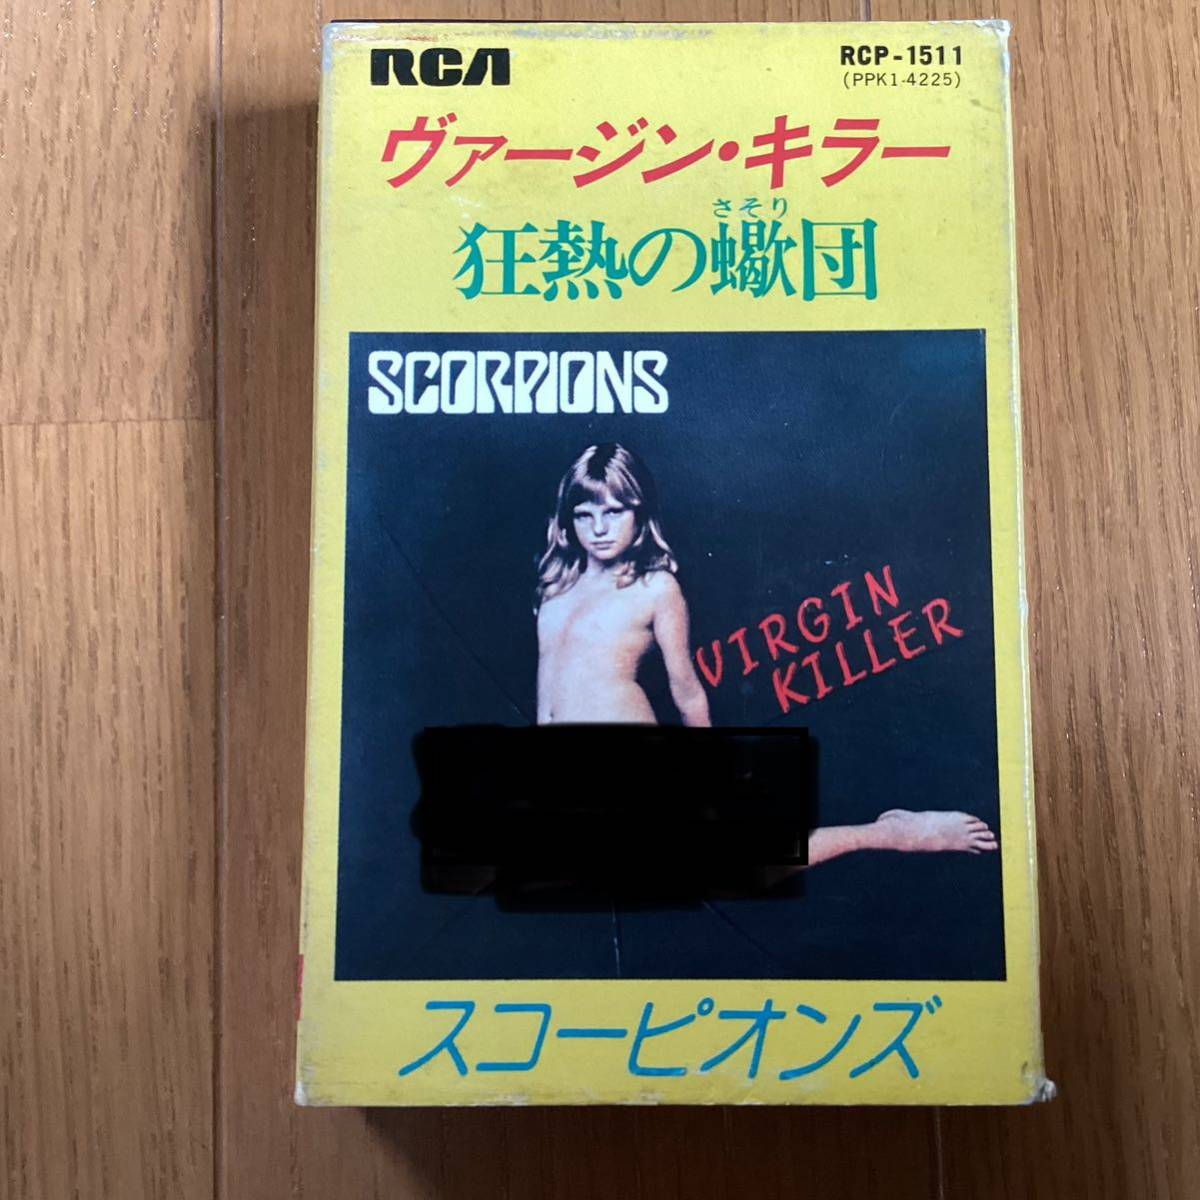 Scorpions スコーピオンズ / Virgin Killer 狂熱の蠍団   monsterdog